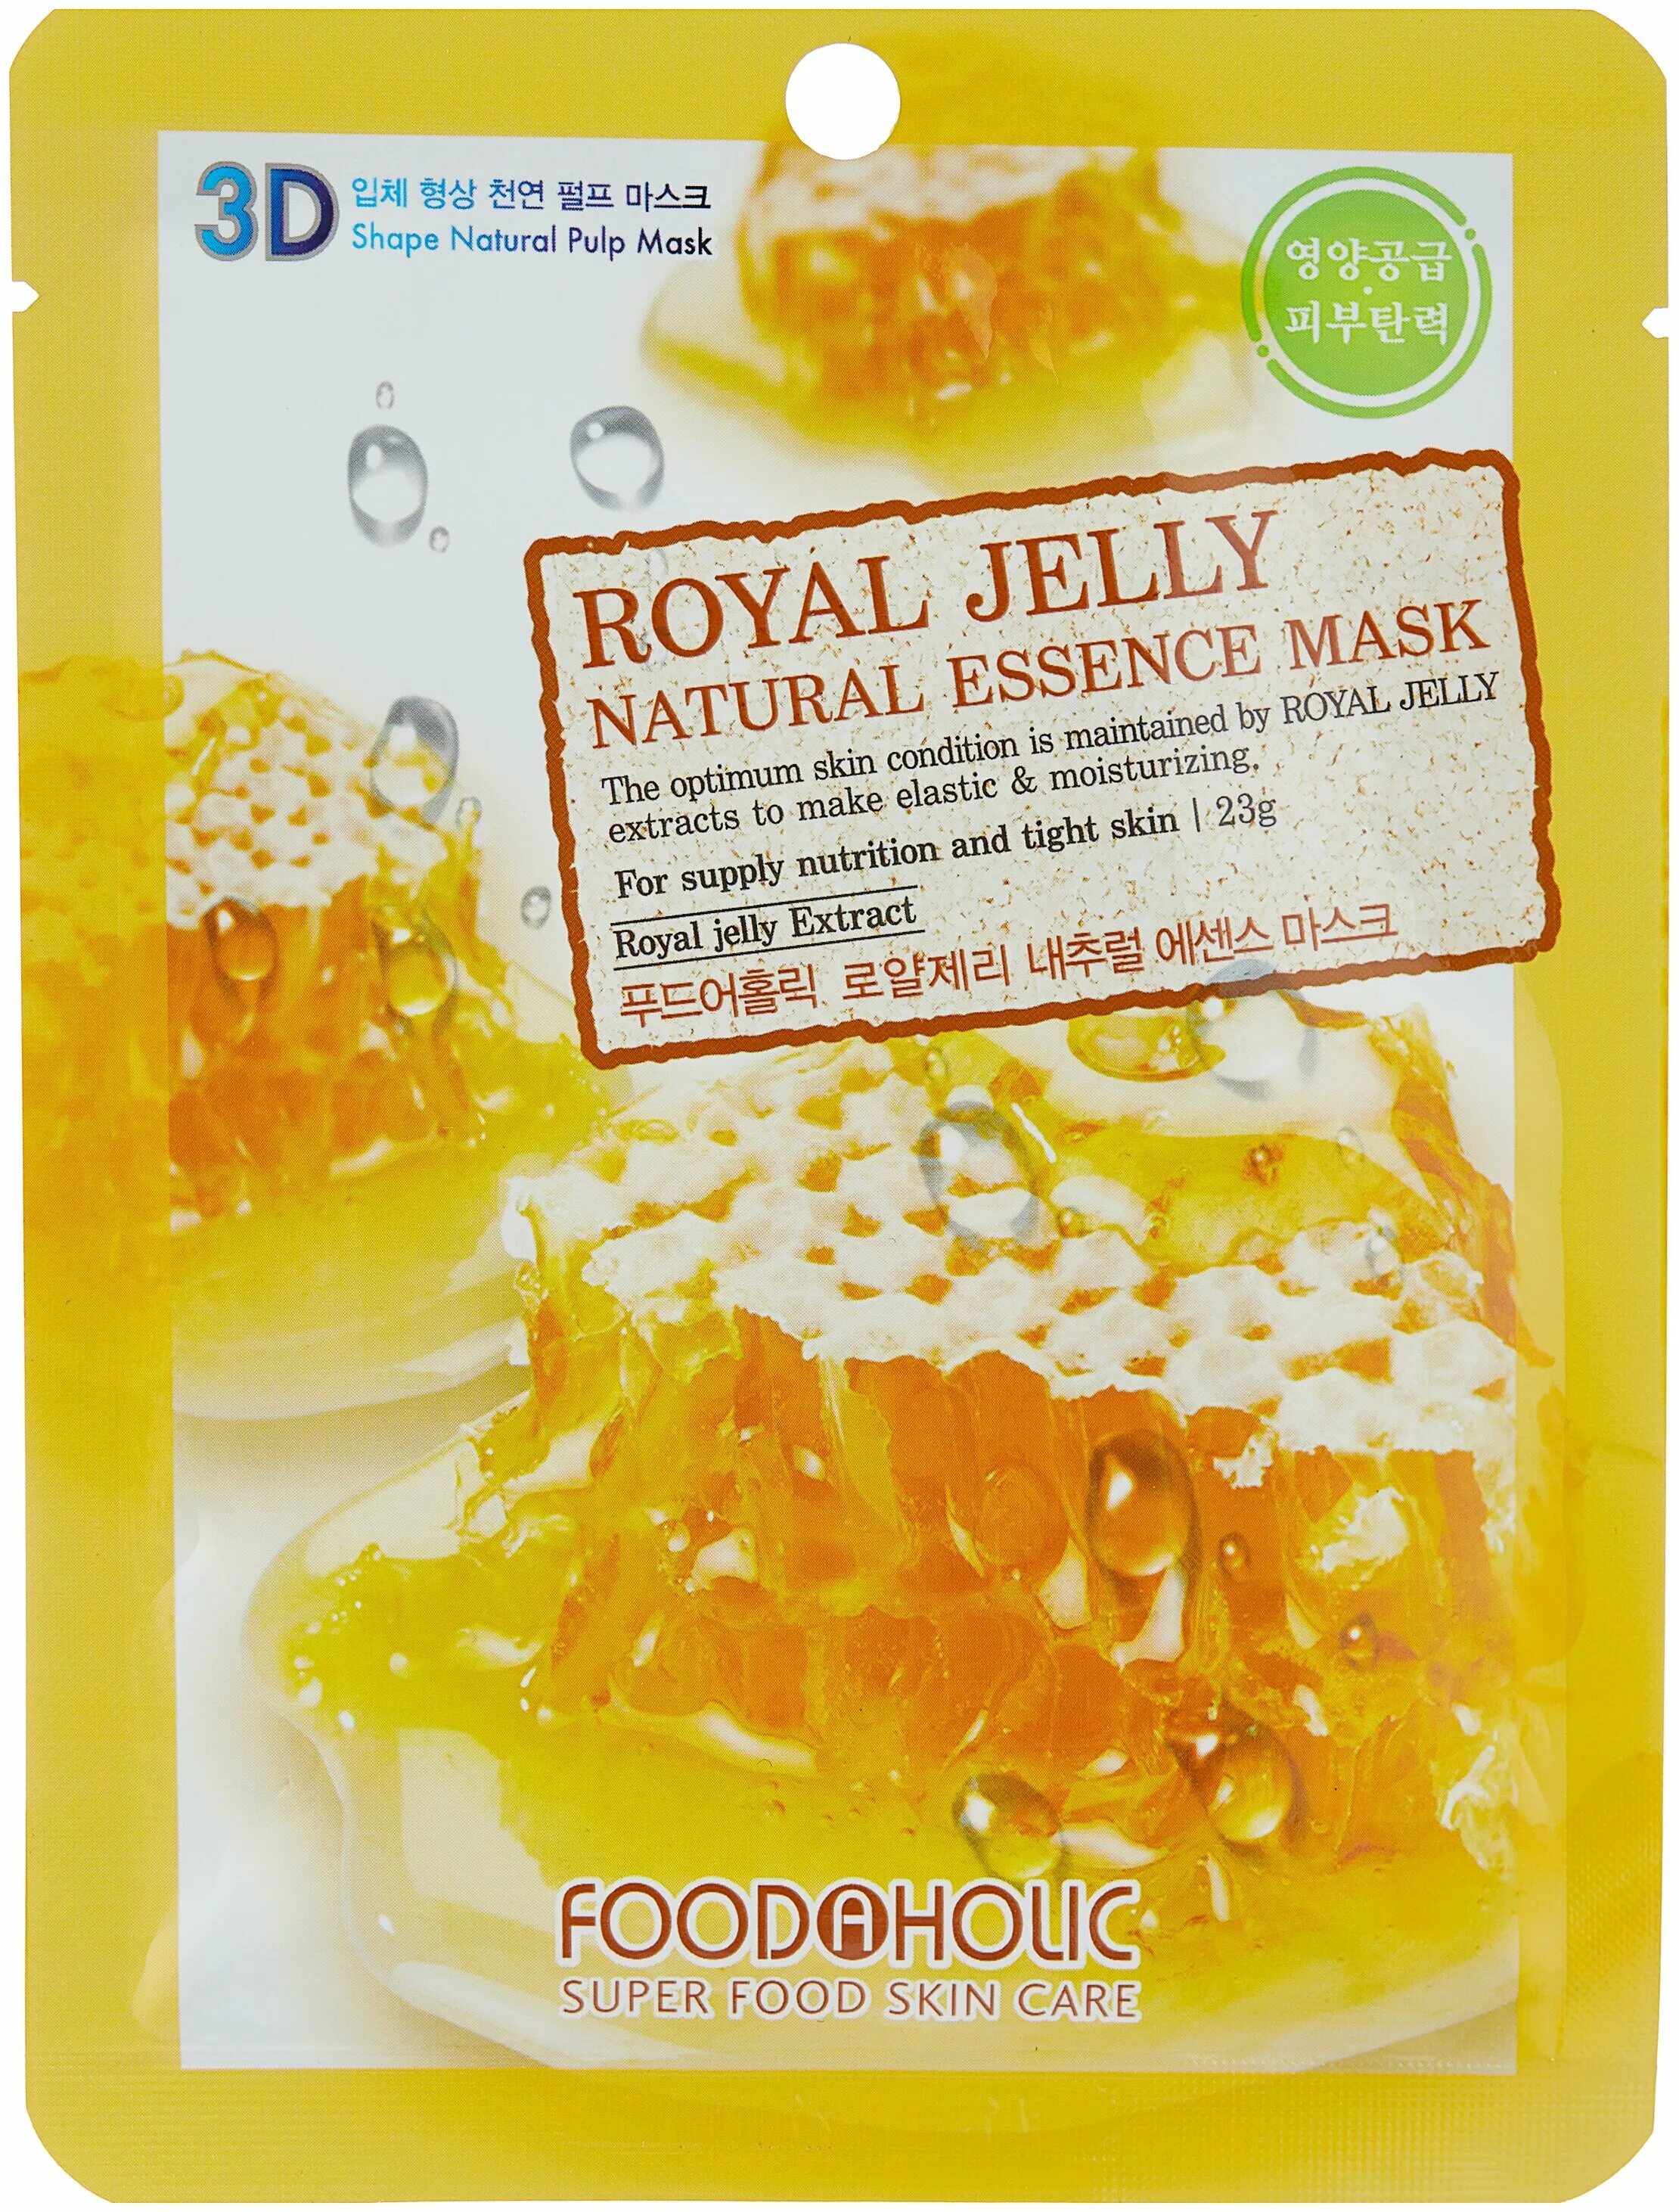 Маска royal jelly. FOODAHOLIC маска тканевая 3d Royal Jelly, 23 мл. FOODAHOLIC natural Essence Mask #Royal Jelly 3d. FOODAHOLIC маска тканевая FOODAHOLIC 3d Mask Sheet Royal Jelly (23ml) 23мл. Маска д/лица тканевая с экстрактом маточного молочка FOODAHOLIC.